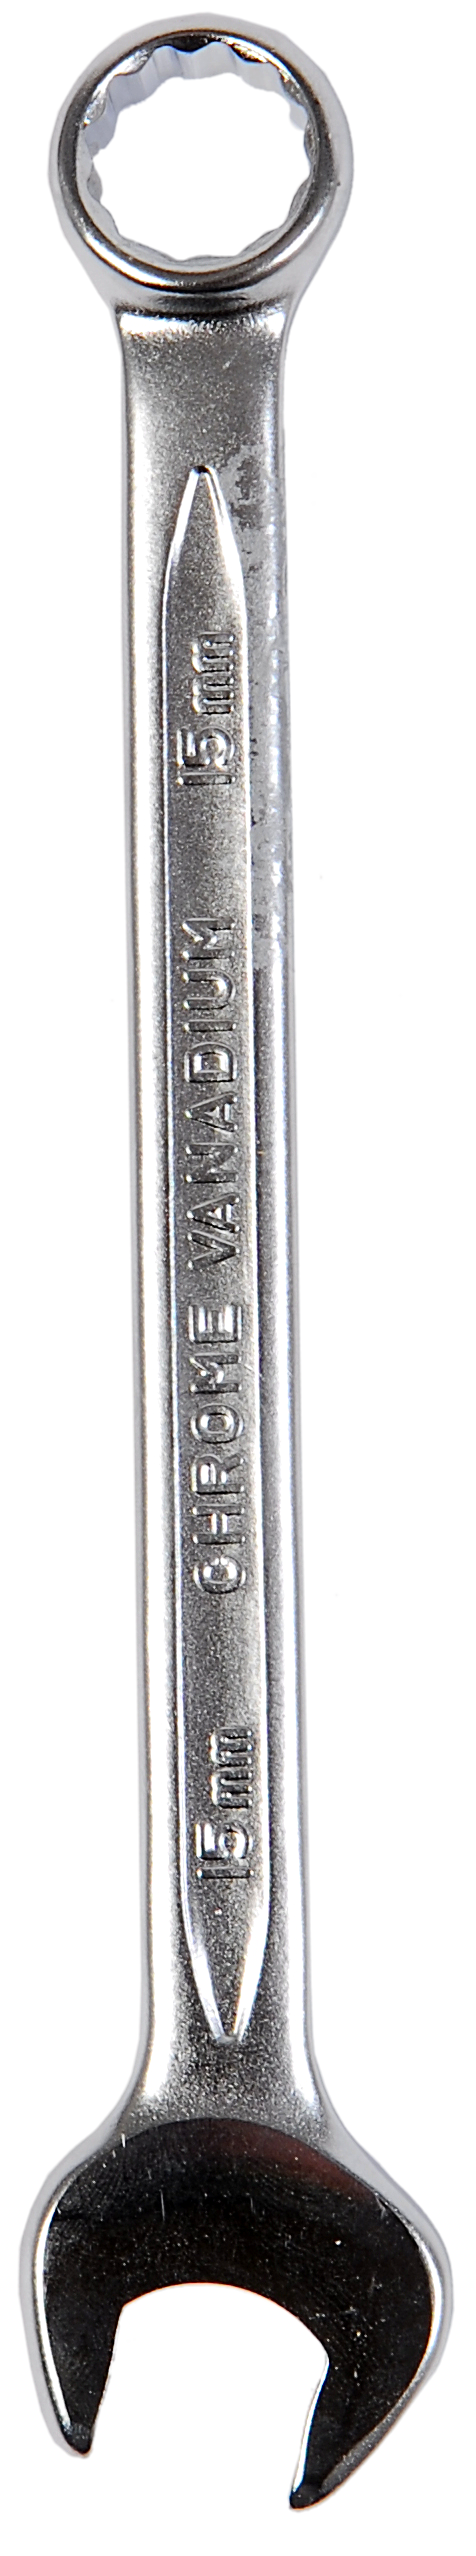 Stanley Slimline Combination Wrench 15mm